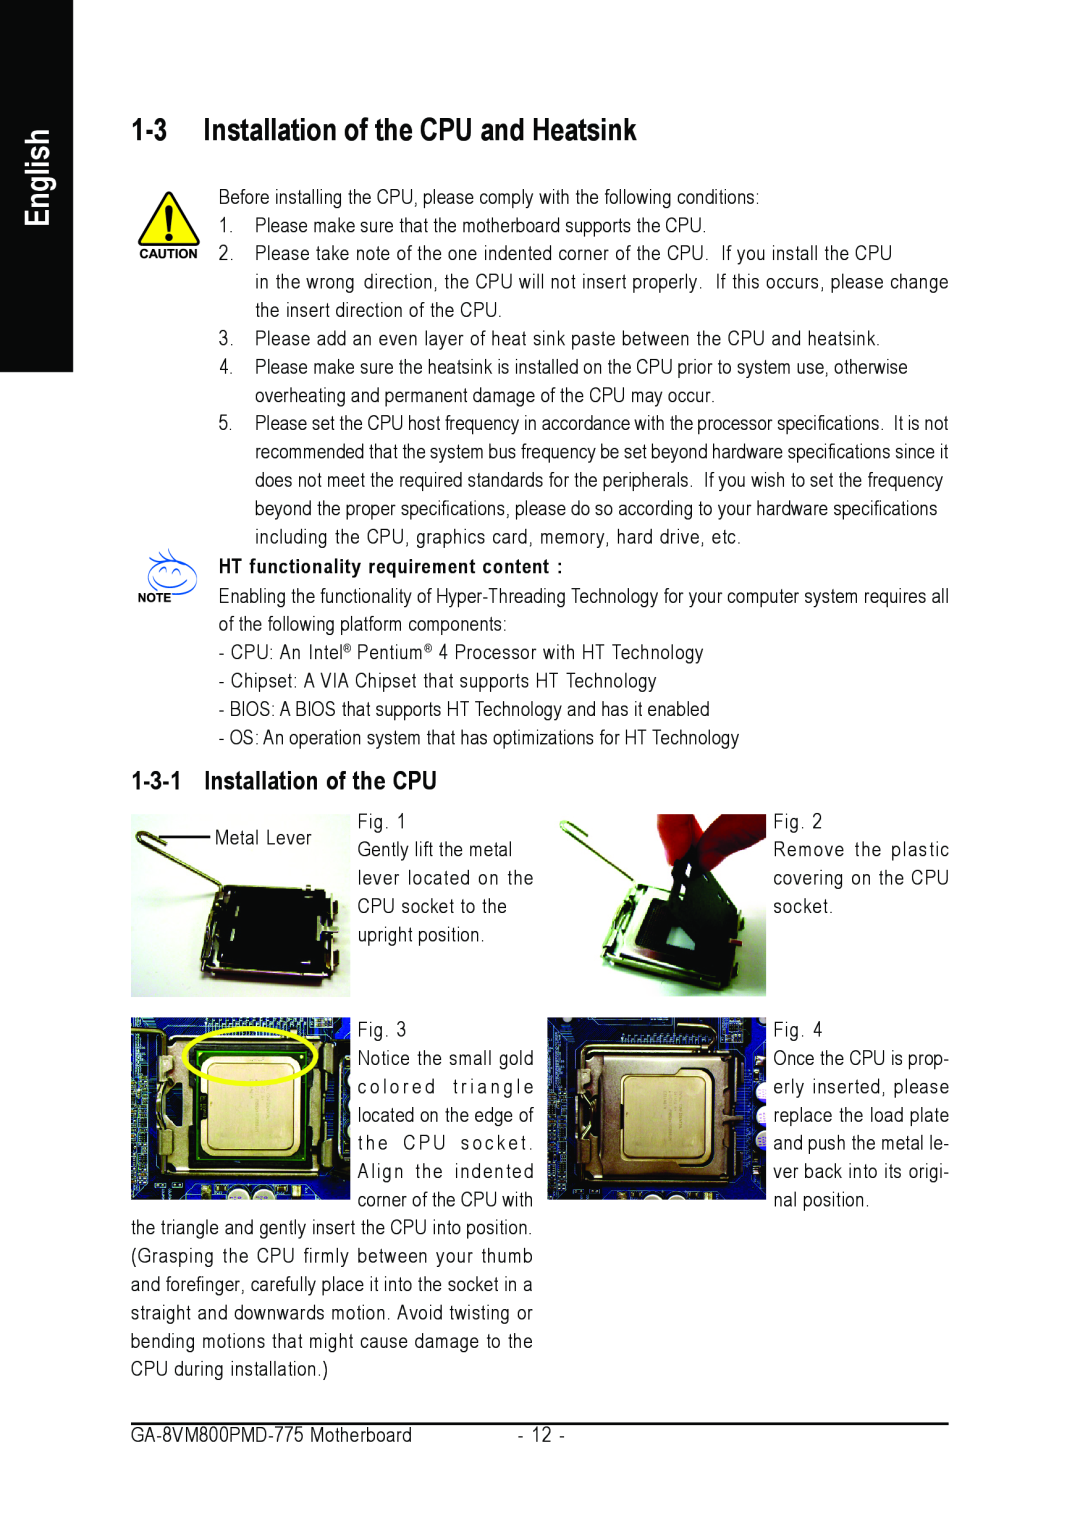 Intel GA-8VM800PMD-775 user manual Installation of the CPU and Heatsink, English 